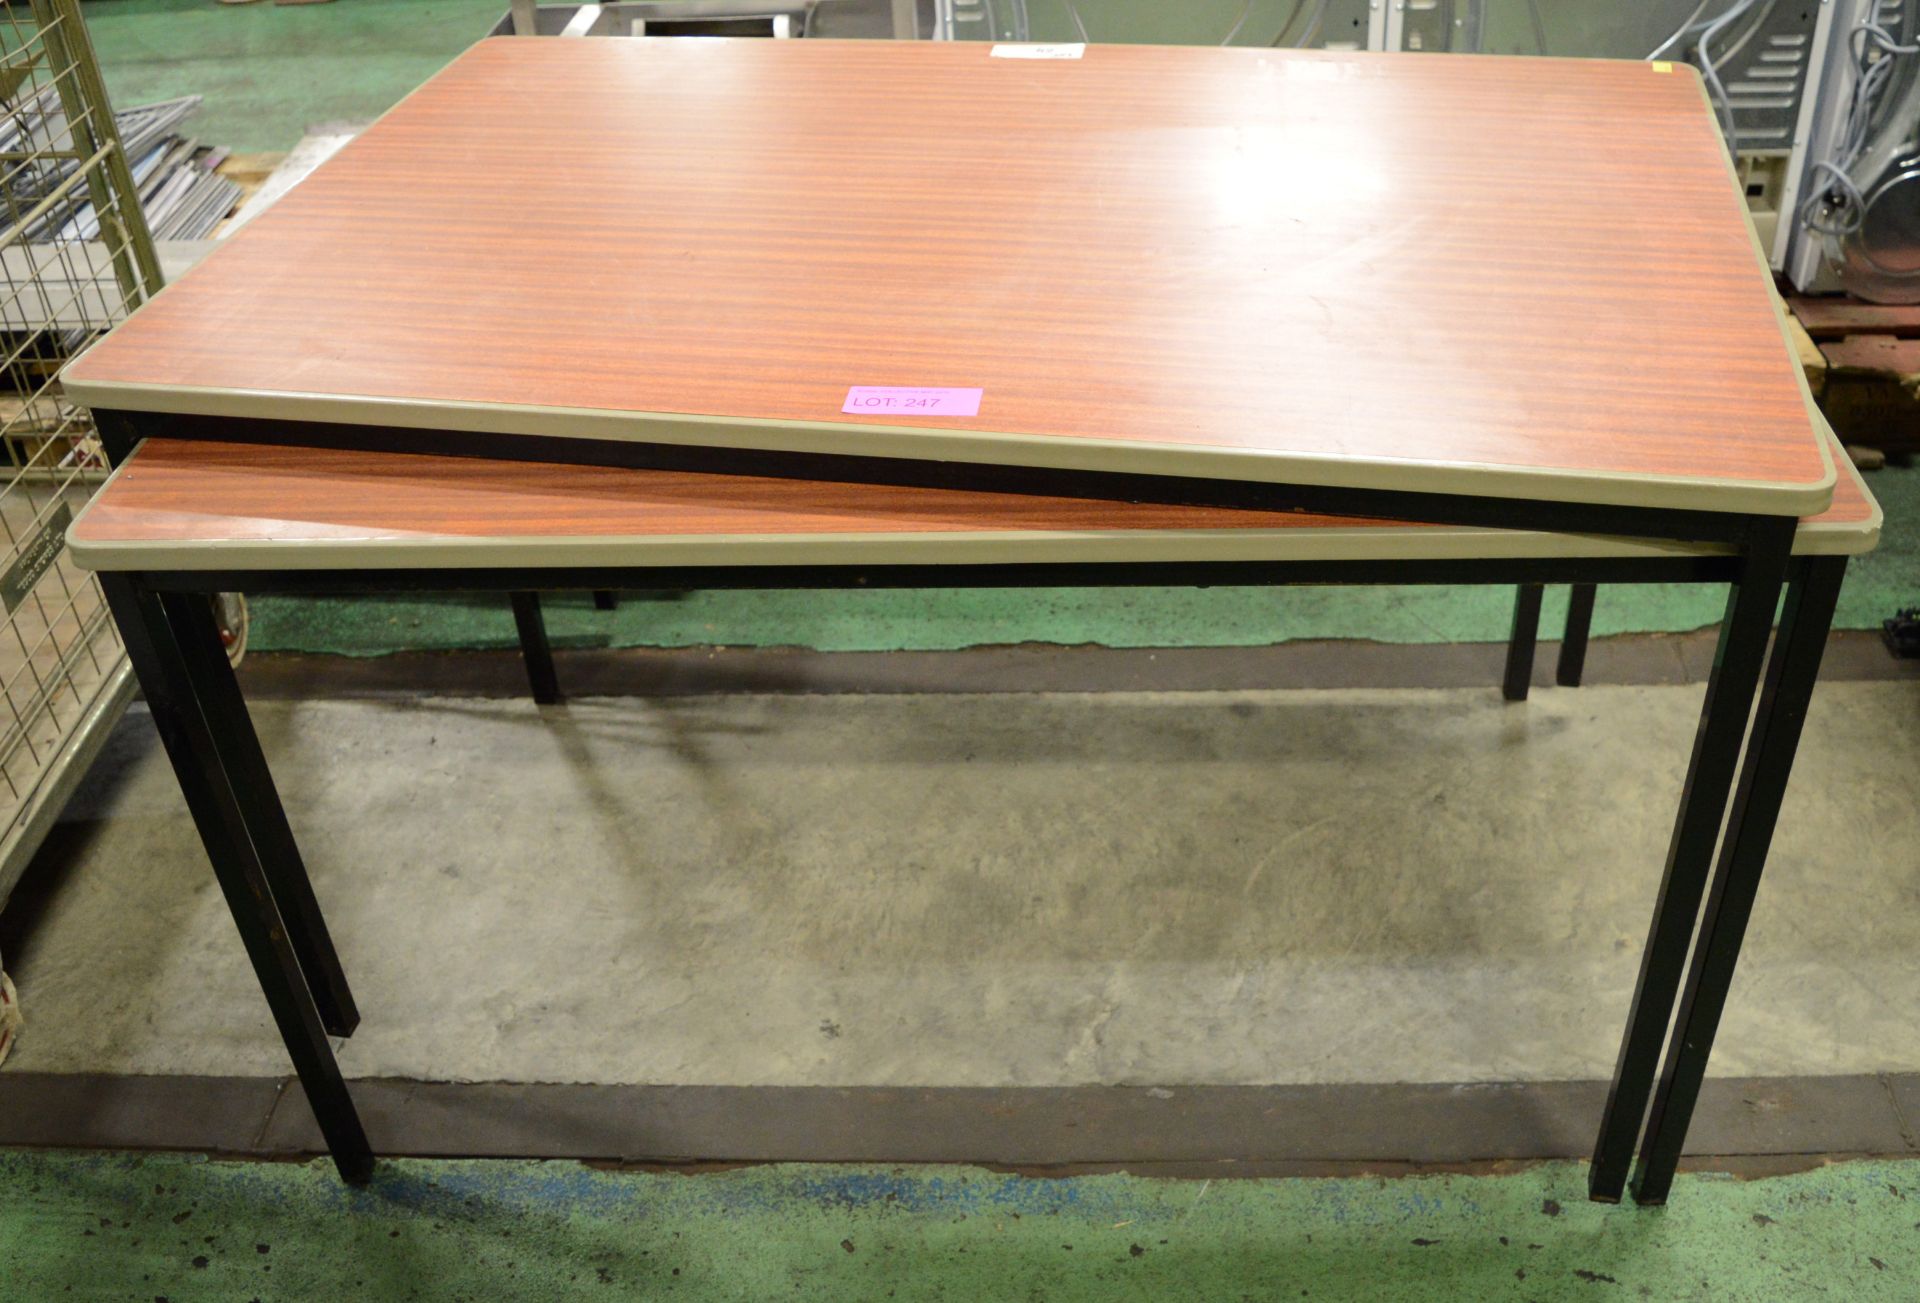 2x Tables 1220 x 760mm.